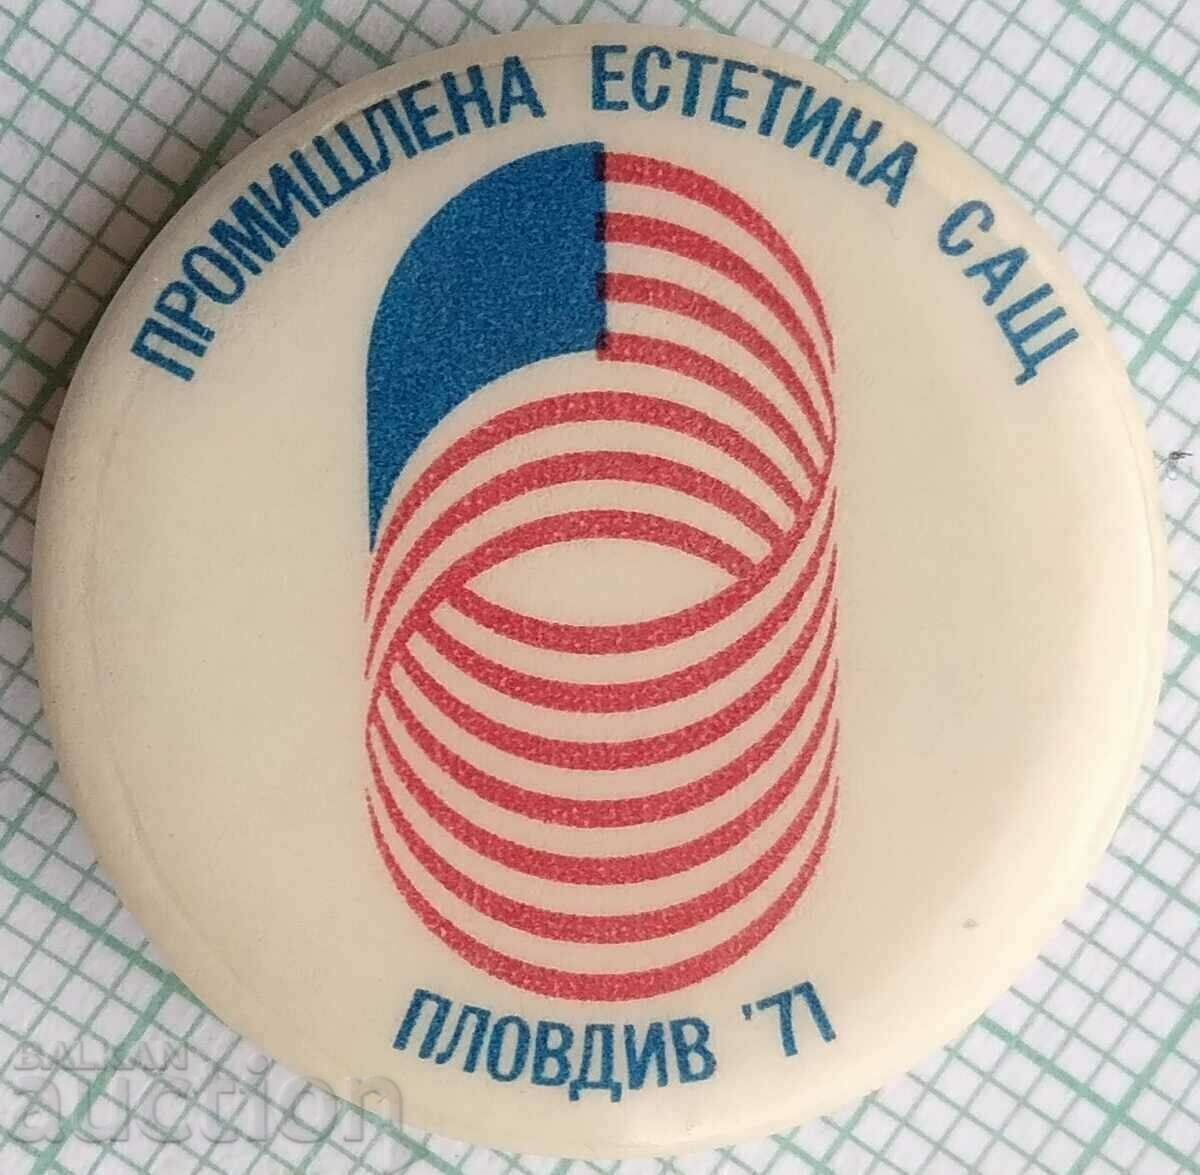 14570 Badge - Industrial aesthetics USA Plovdiv 1971